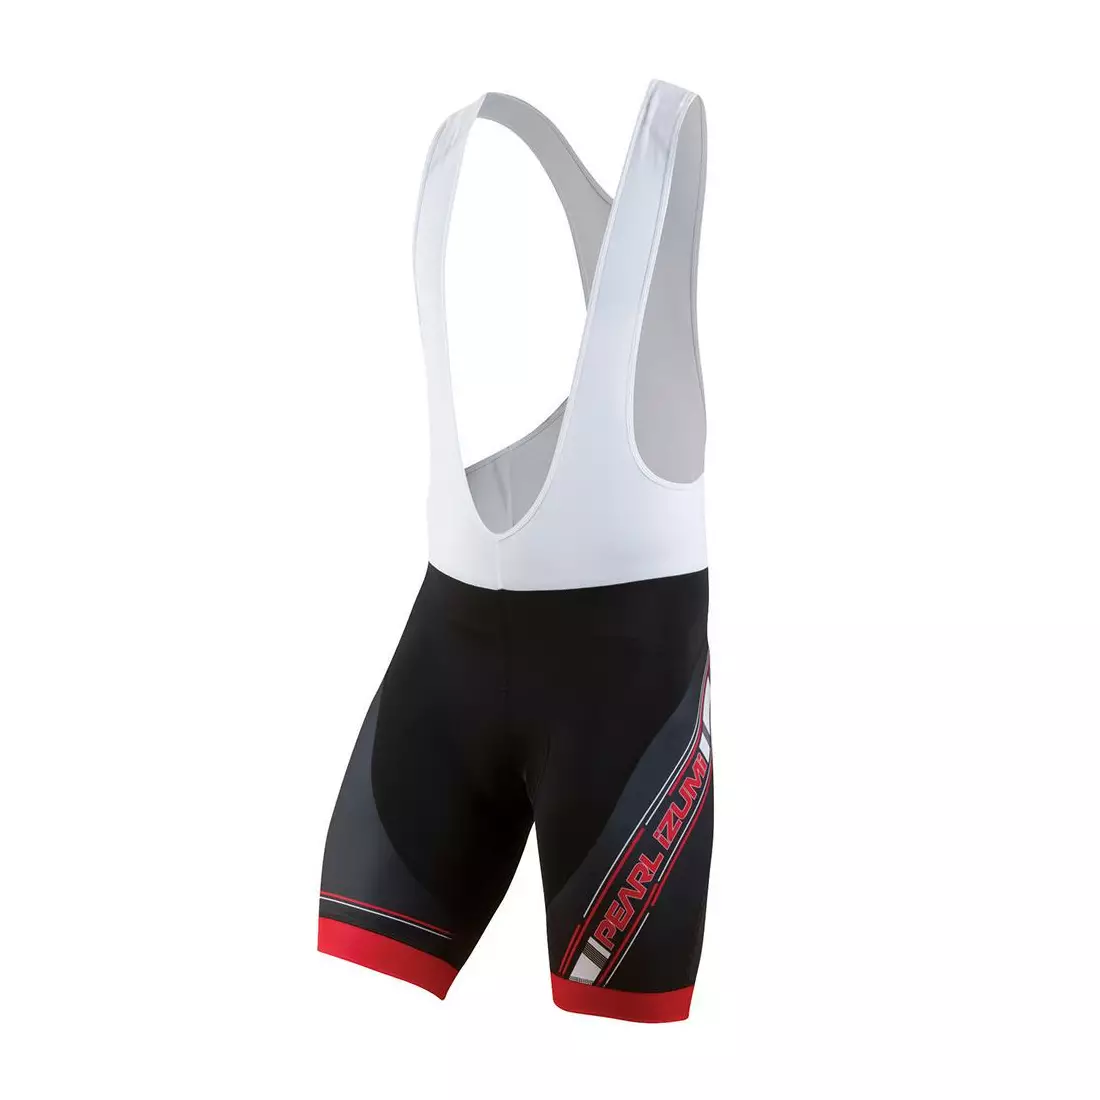 PEARL IZUMI ELITE LTD men's bib shorts, 0283-4IR, color: black and red